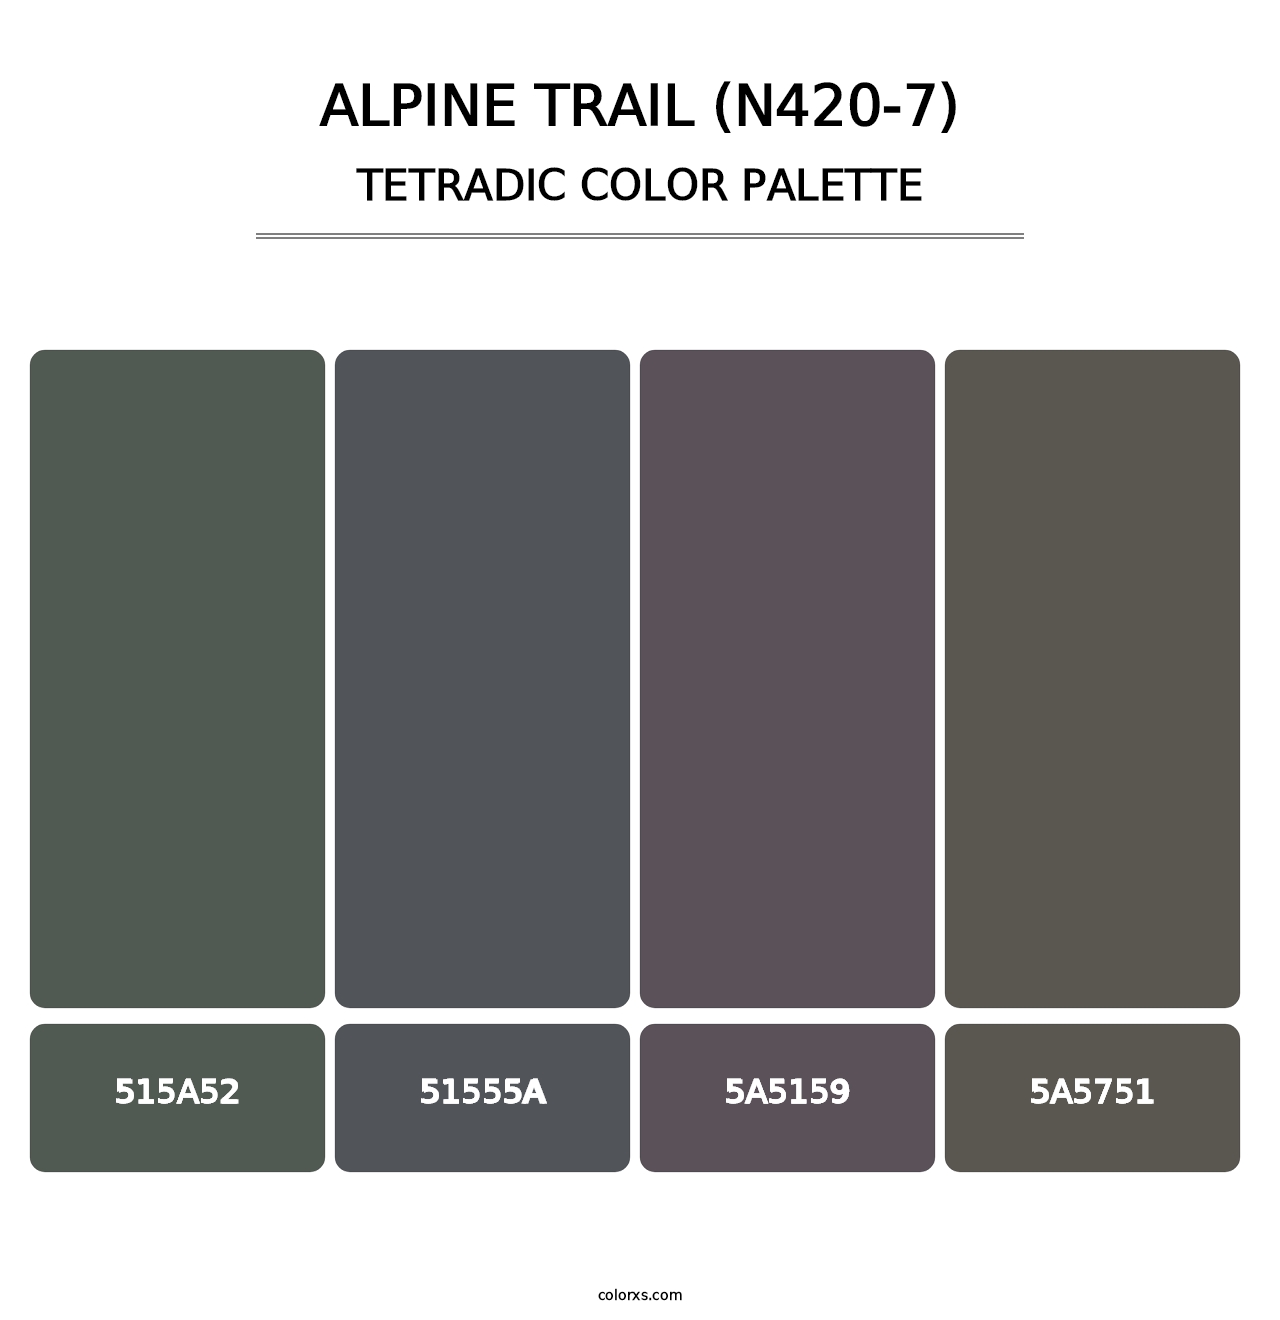 Alpine Trail (N420-7) - Tetradic Color Palette